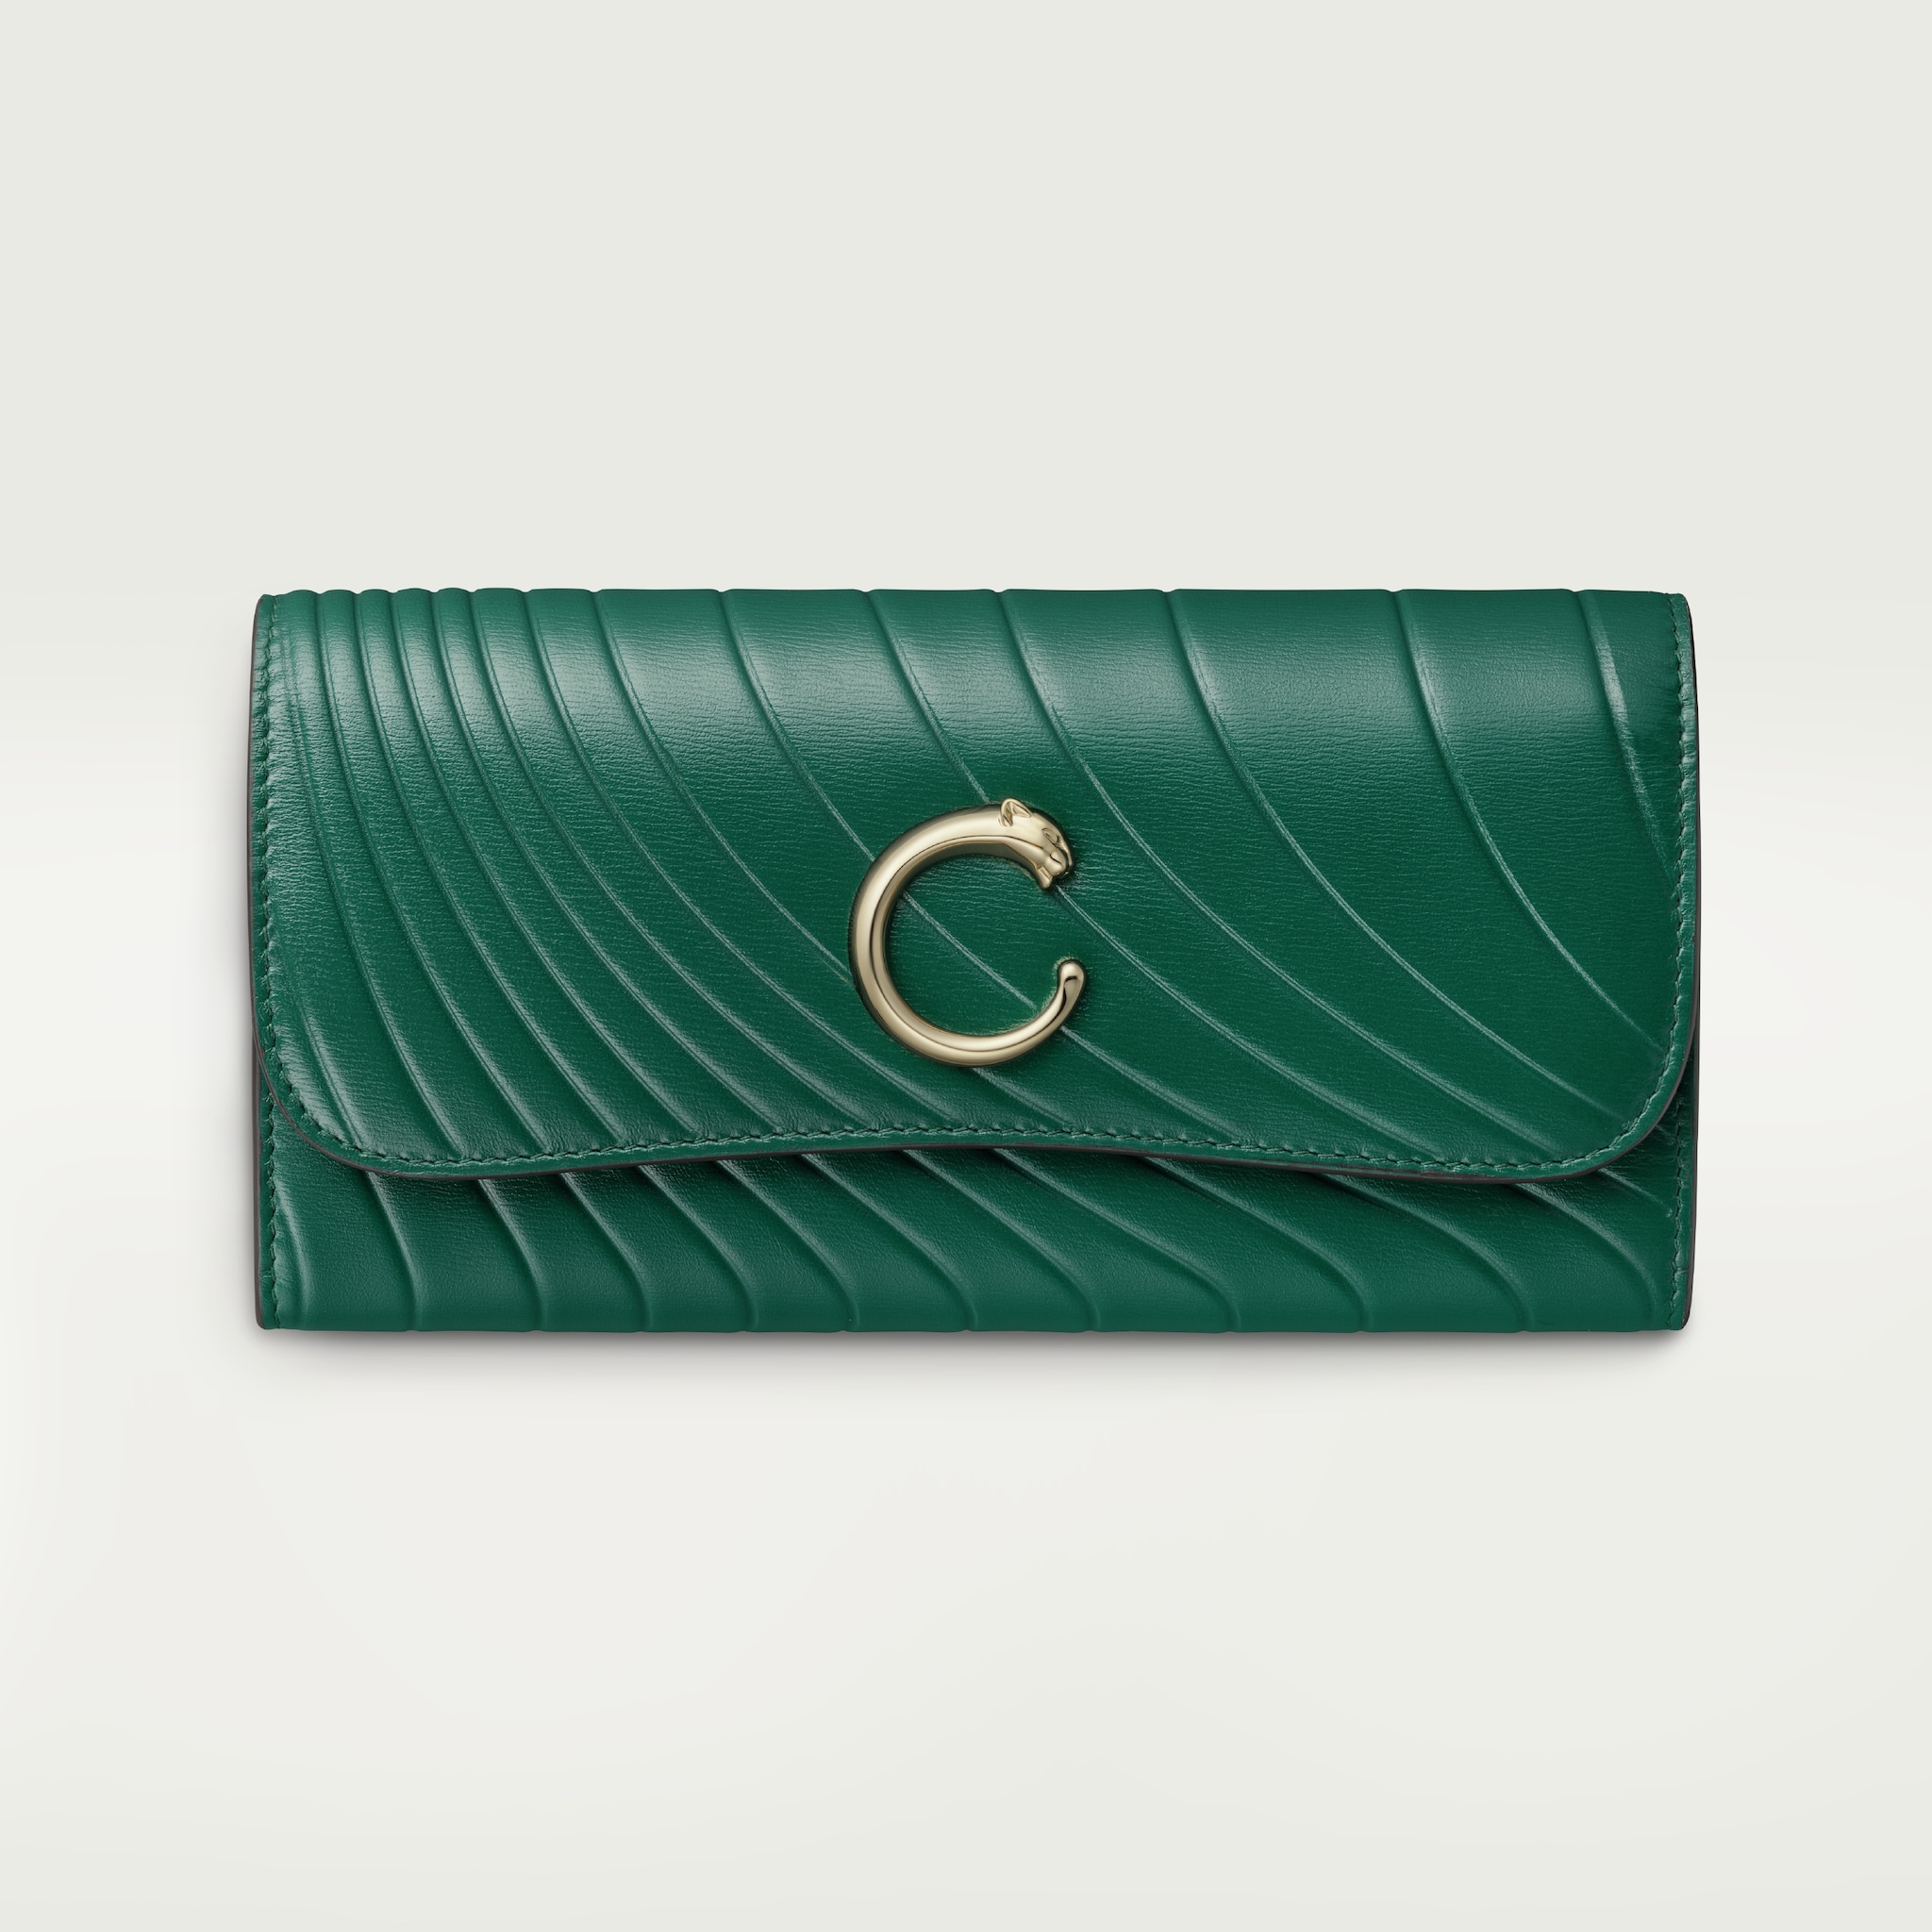 International wallet with flap, Panthère de CartierEmerald green calfskin with embossed Cartier signature motif, golden finish